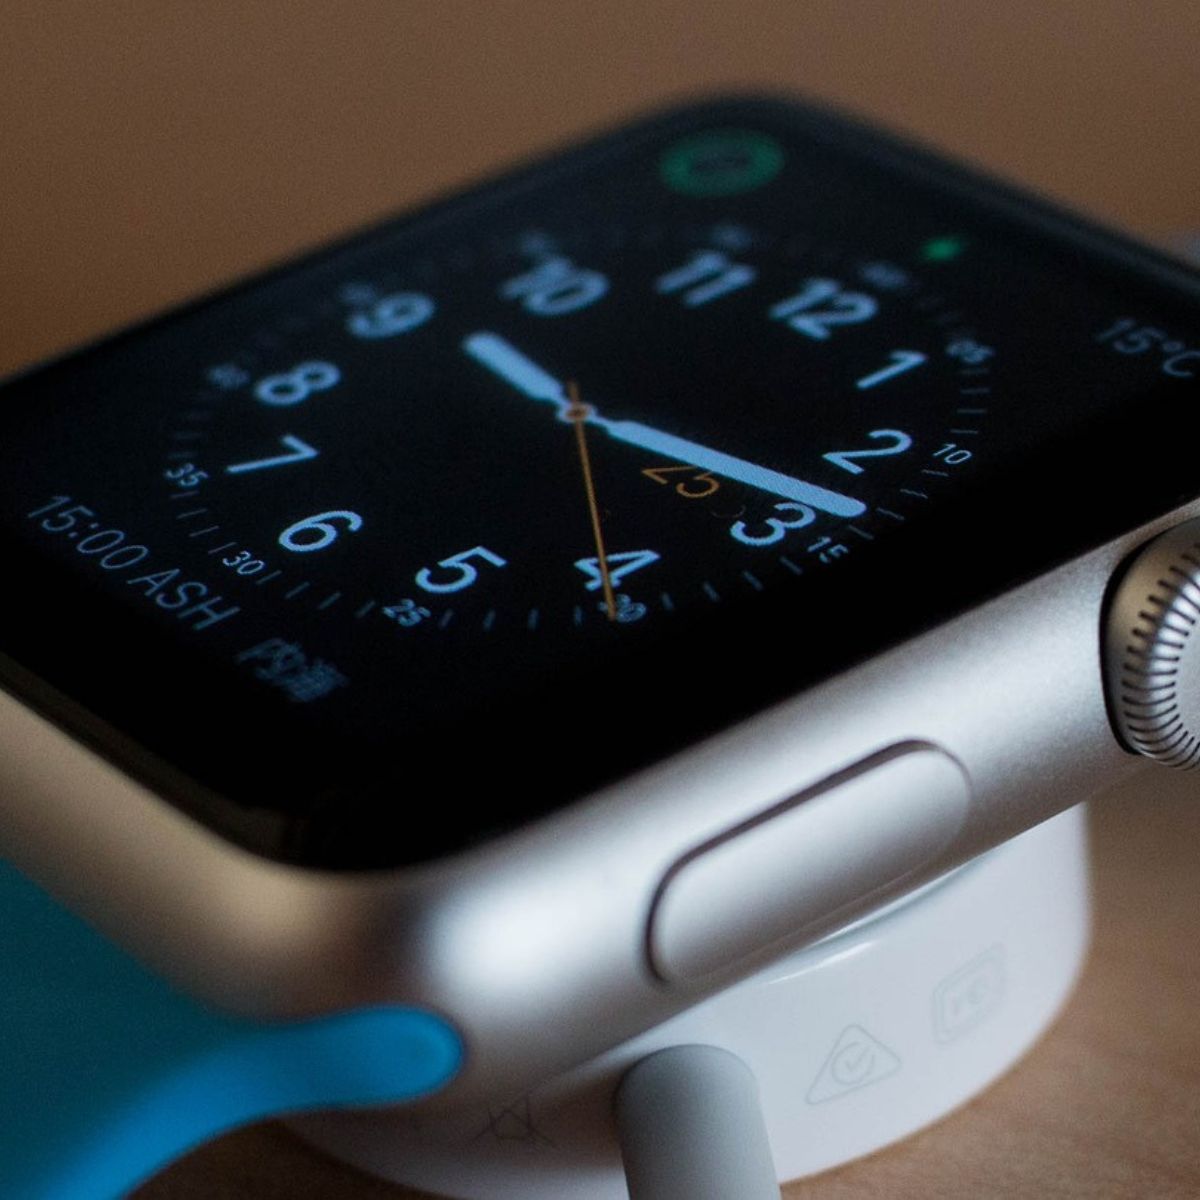 Clean Apple watch sensors